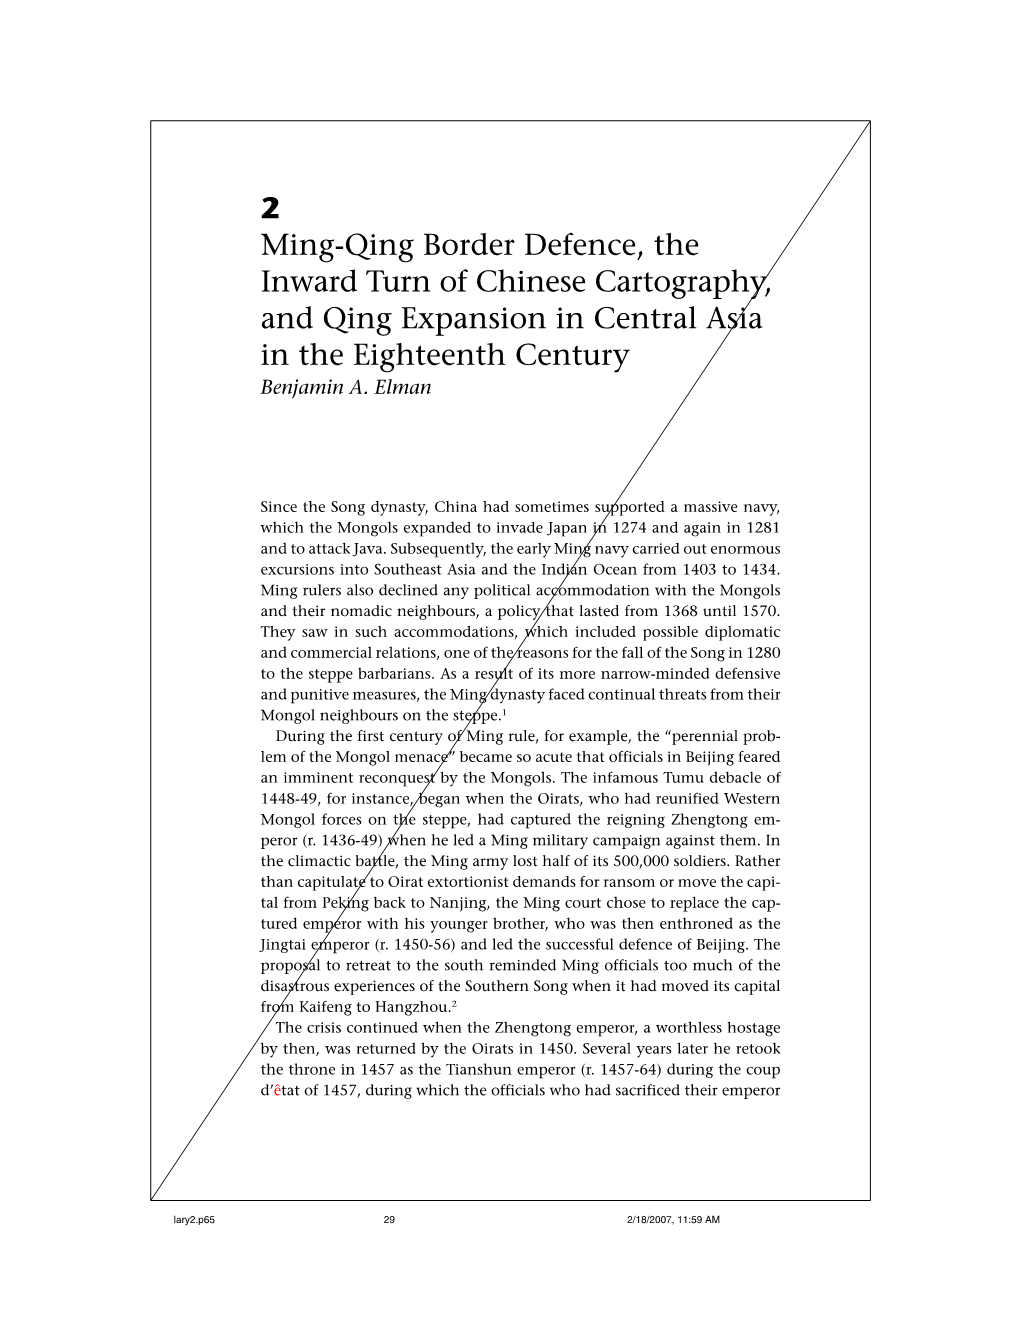 Ming-Qing Border Defense and the Inward Turn of Chinese Cartography